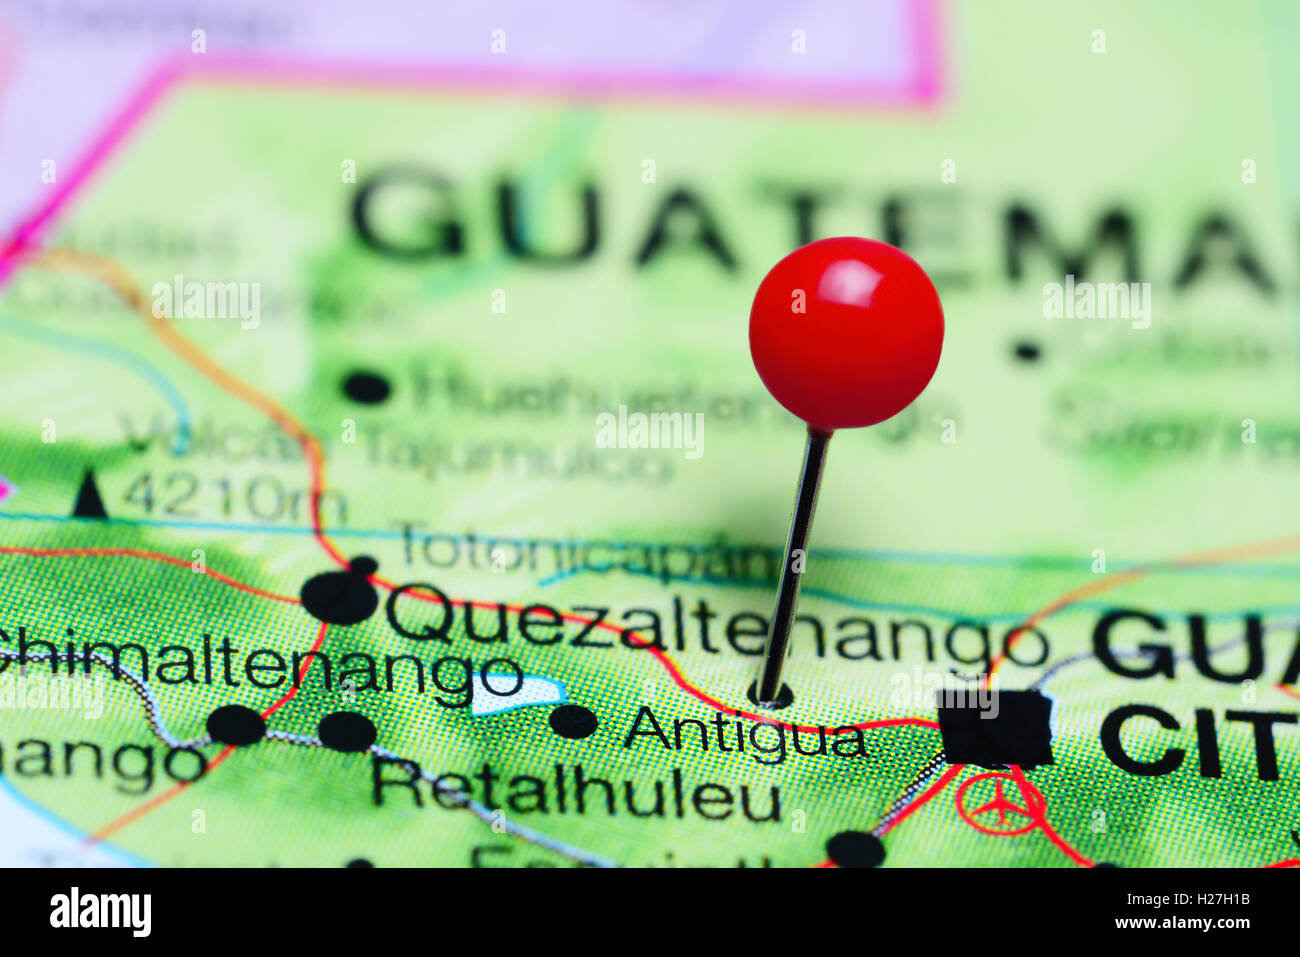 Antigua Pinned On A Map Of Guatemala H27H1B 